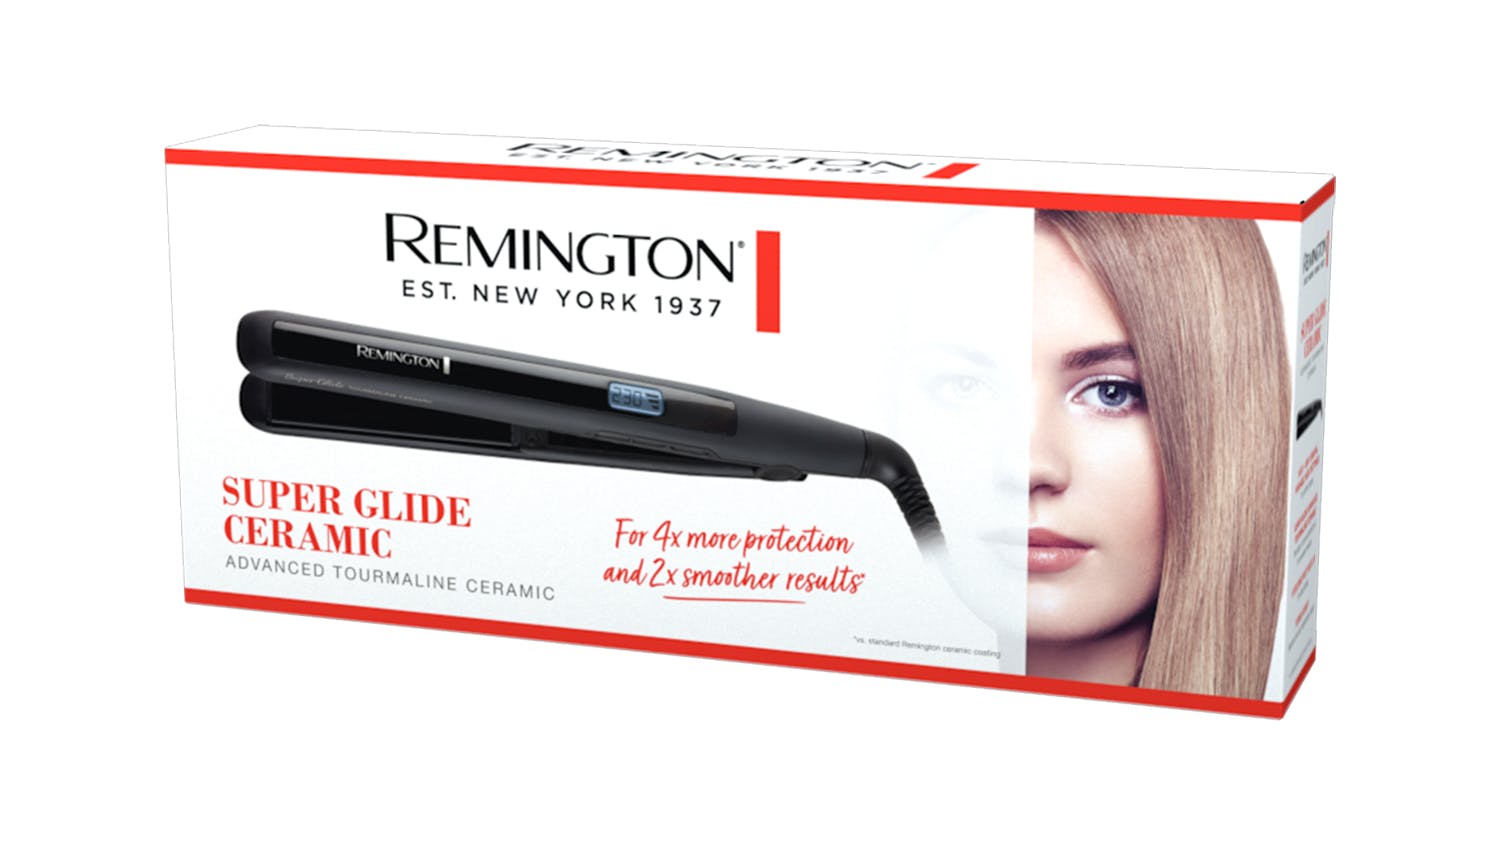 Remington Super Glide Ceramic Hair Straightener